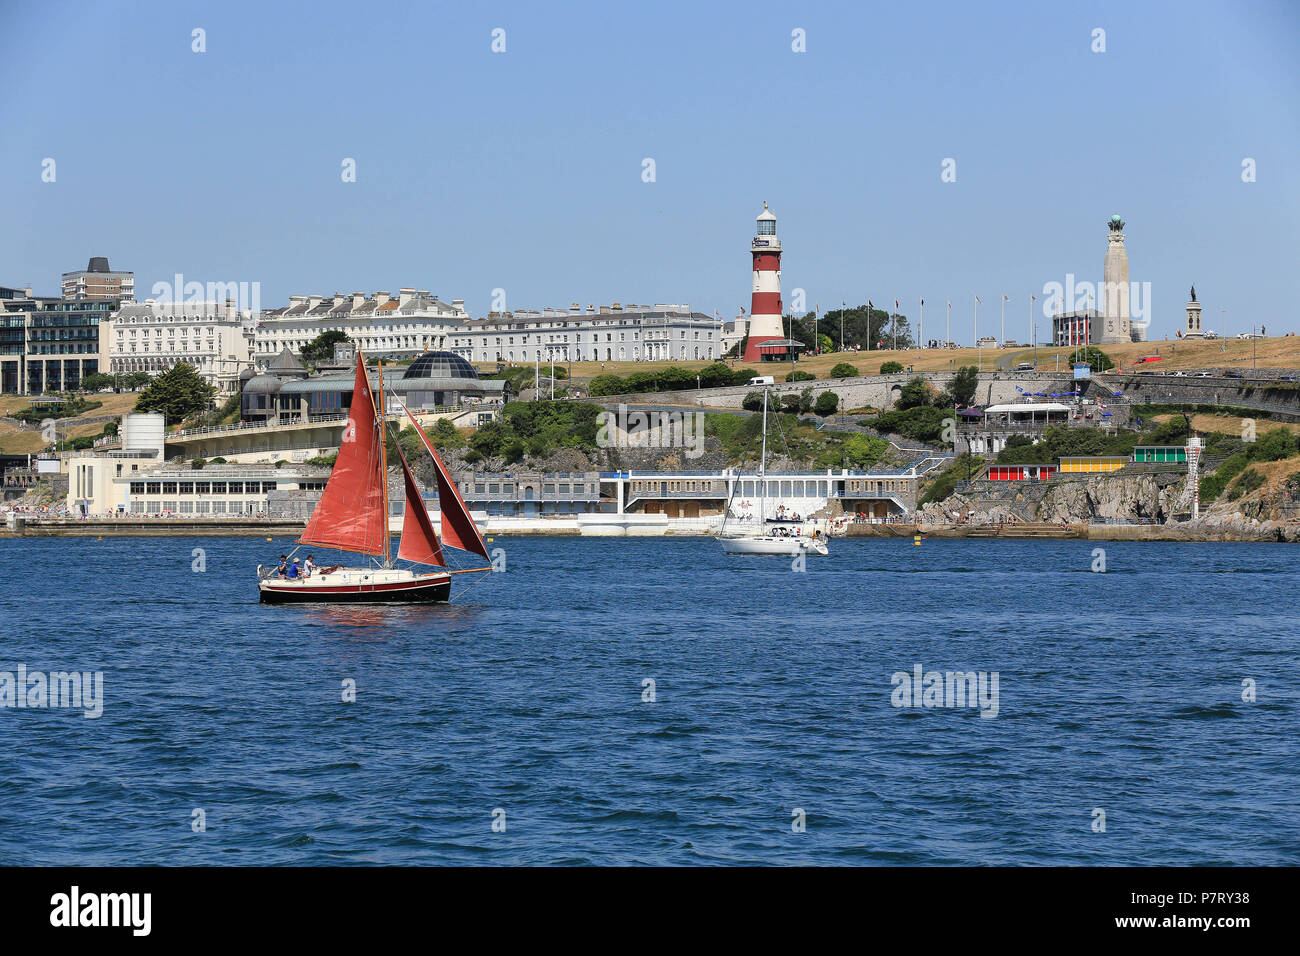 Classic Yachts à voile passé Smeaton's Tower, Plymouth Hoe, Angleterre, Royaume-Uni Banque D'Images